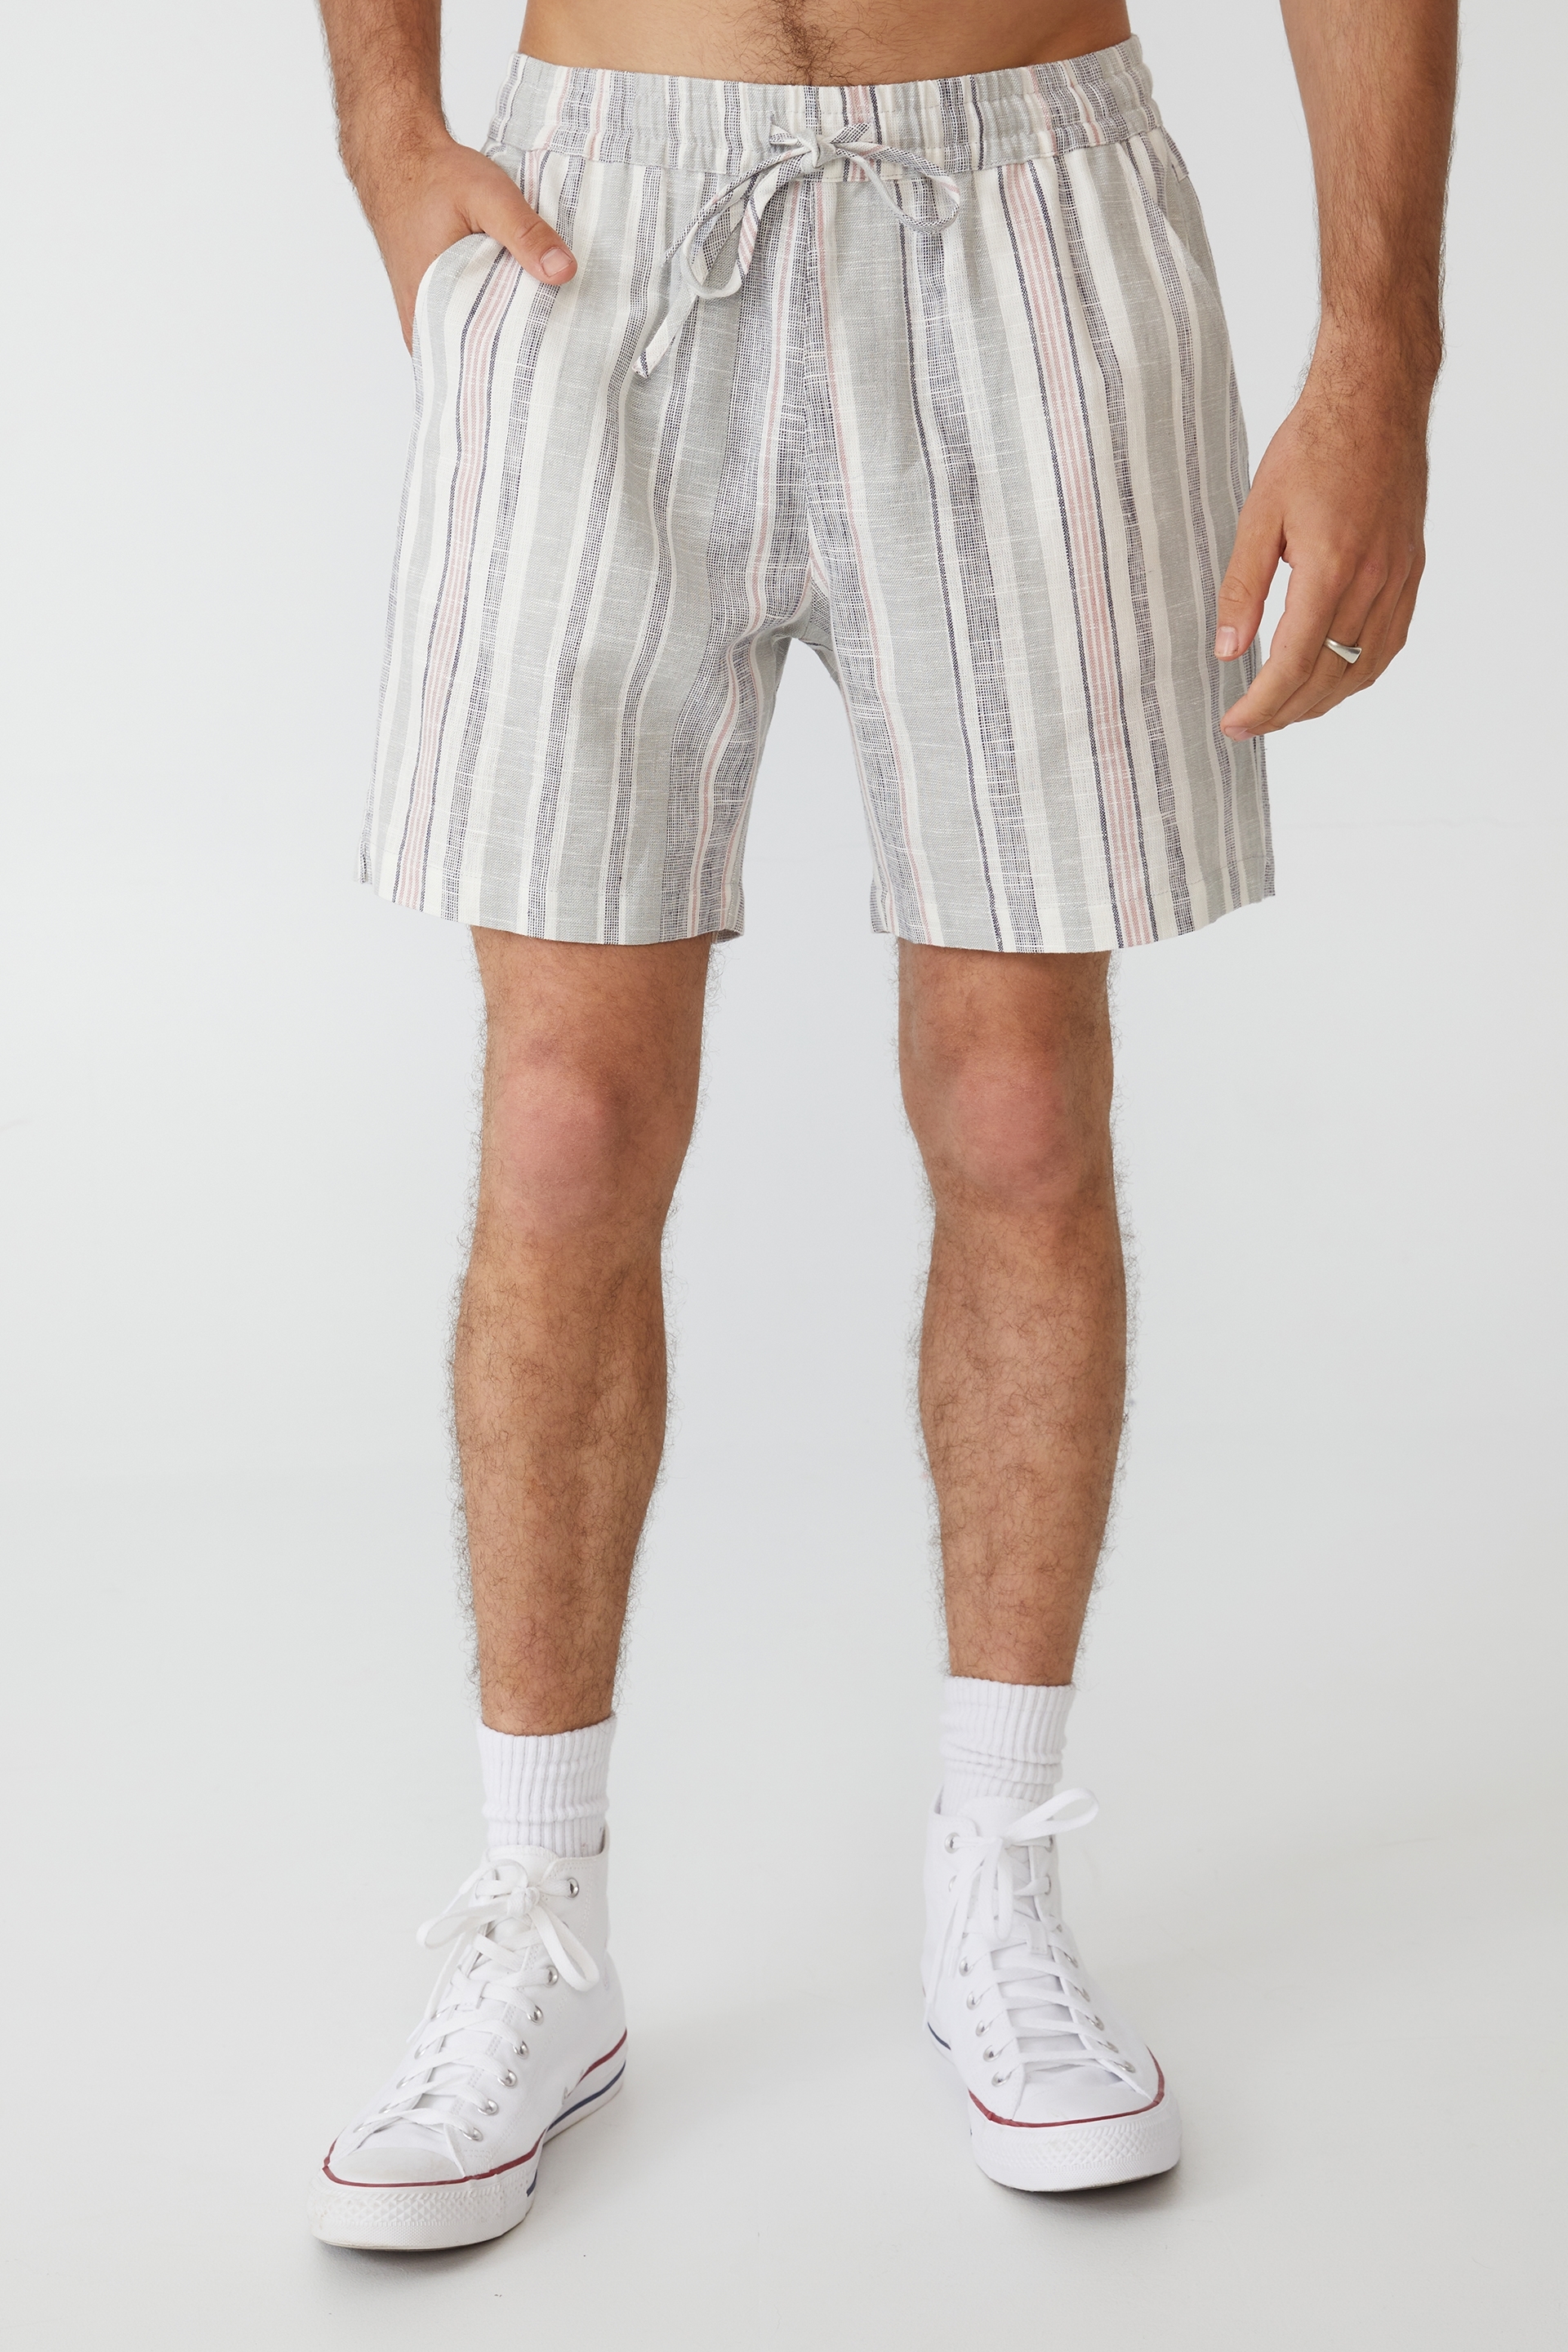 Cotton On Men - East Coast Textured Short - Blue multi stripe